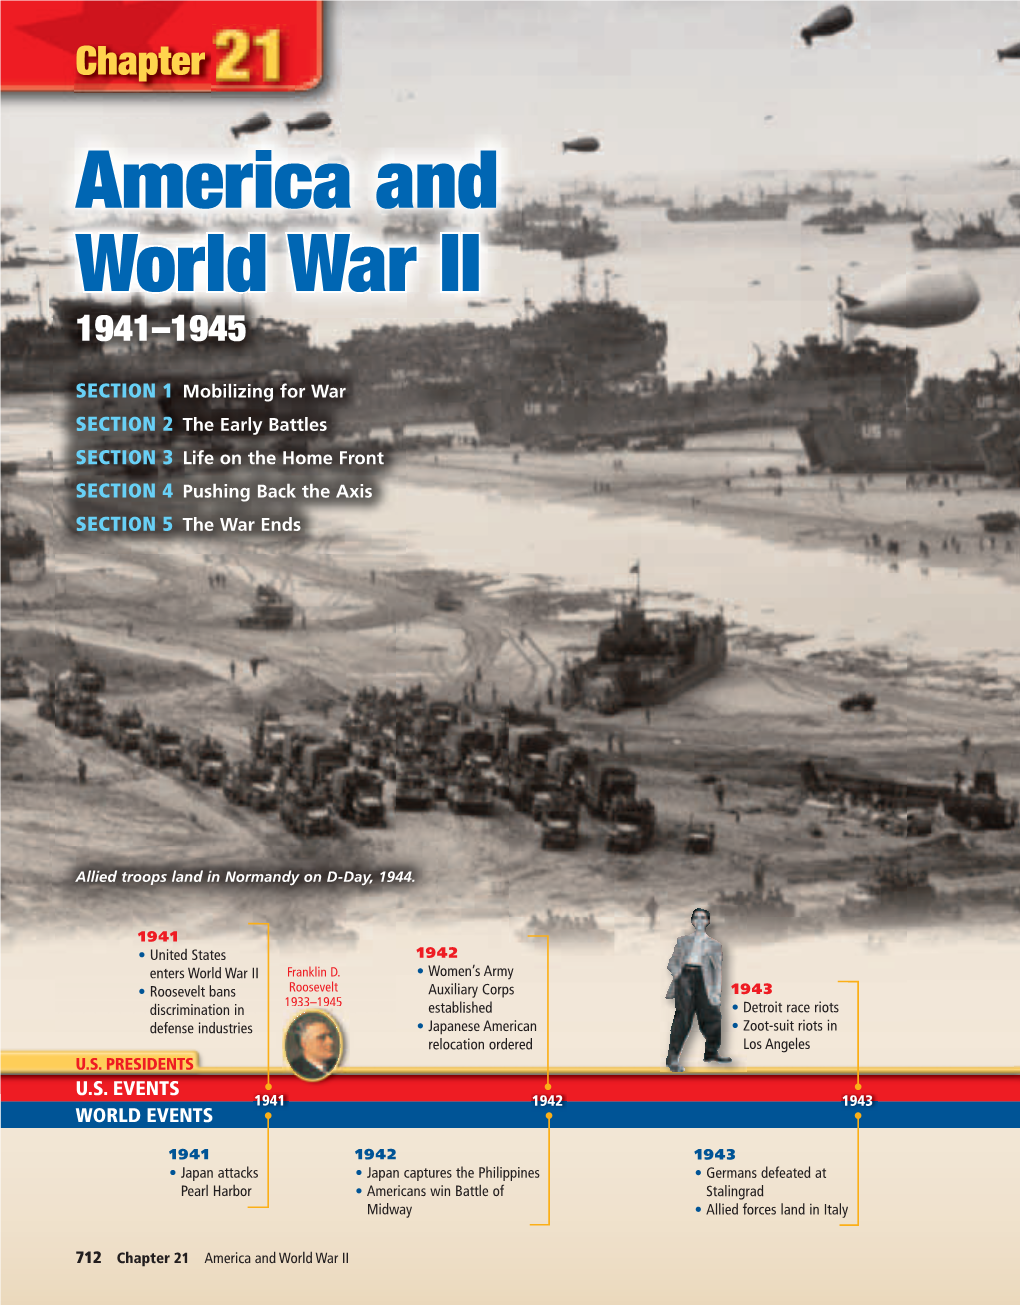 Chapter 21: America and World War II, 1941-1945